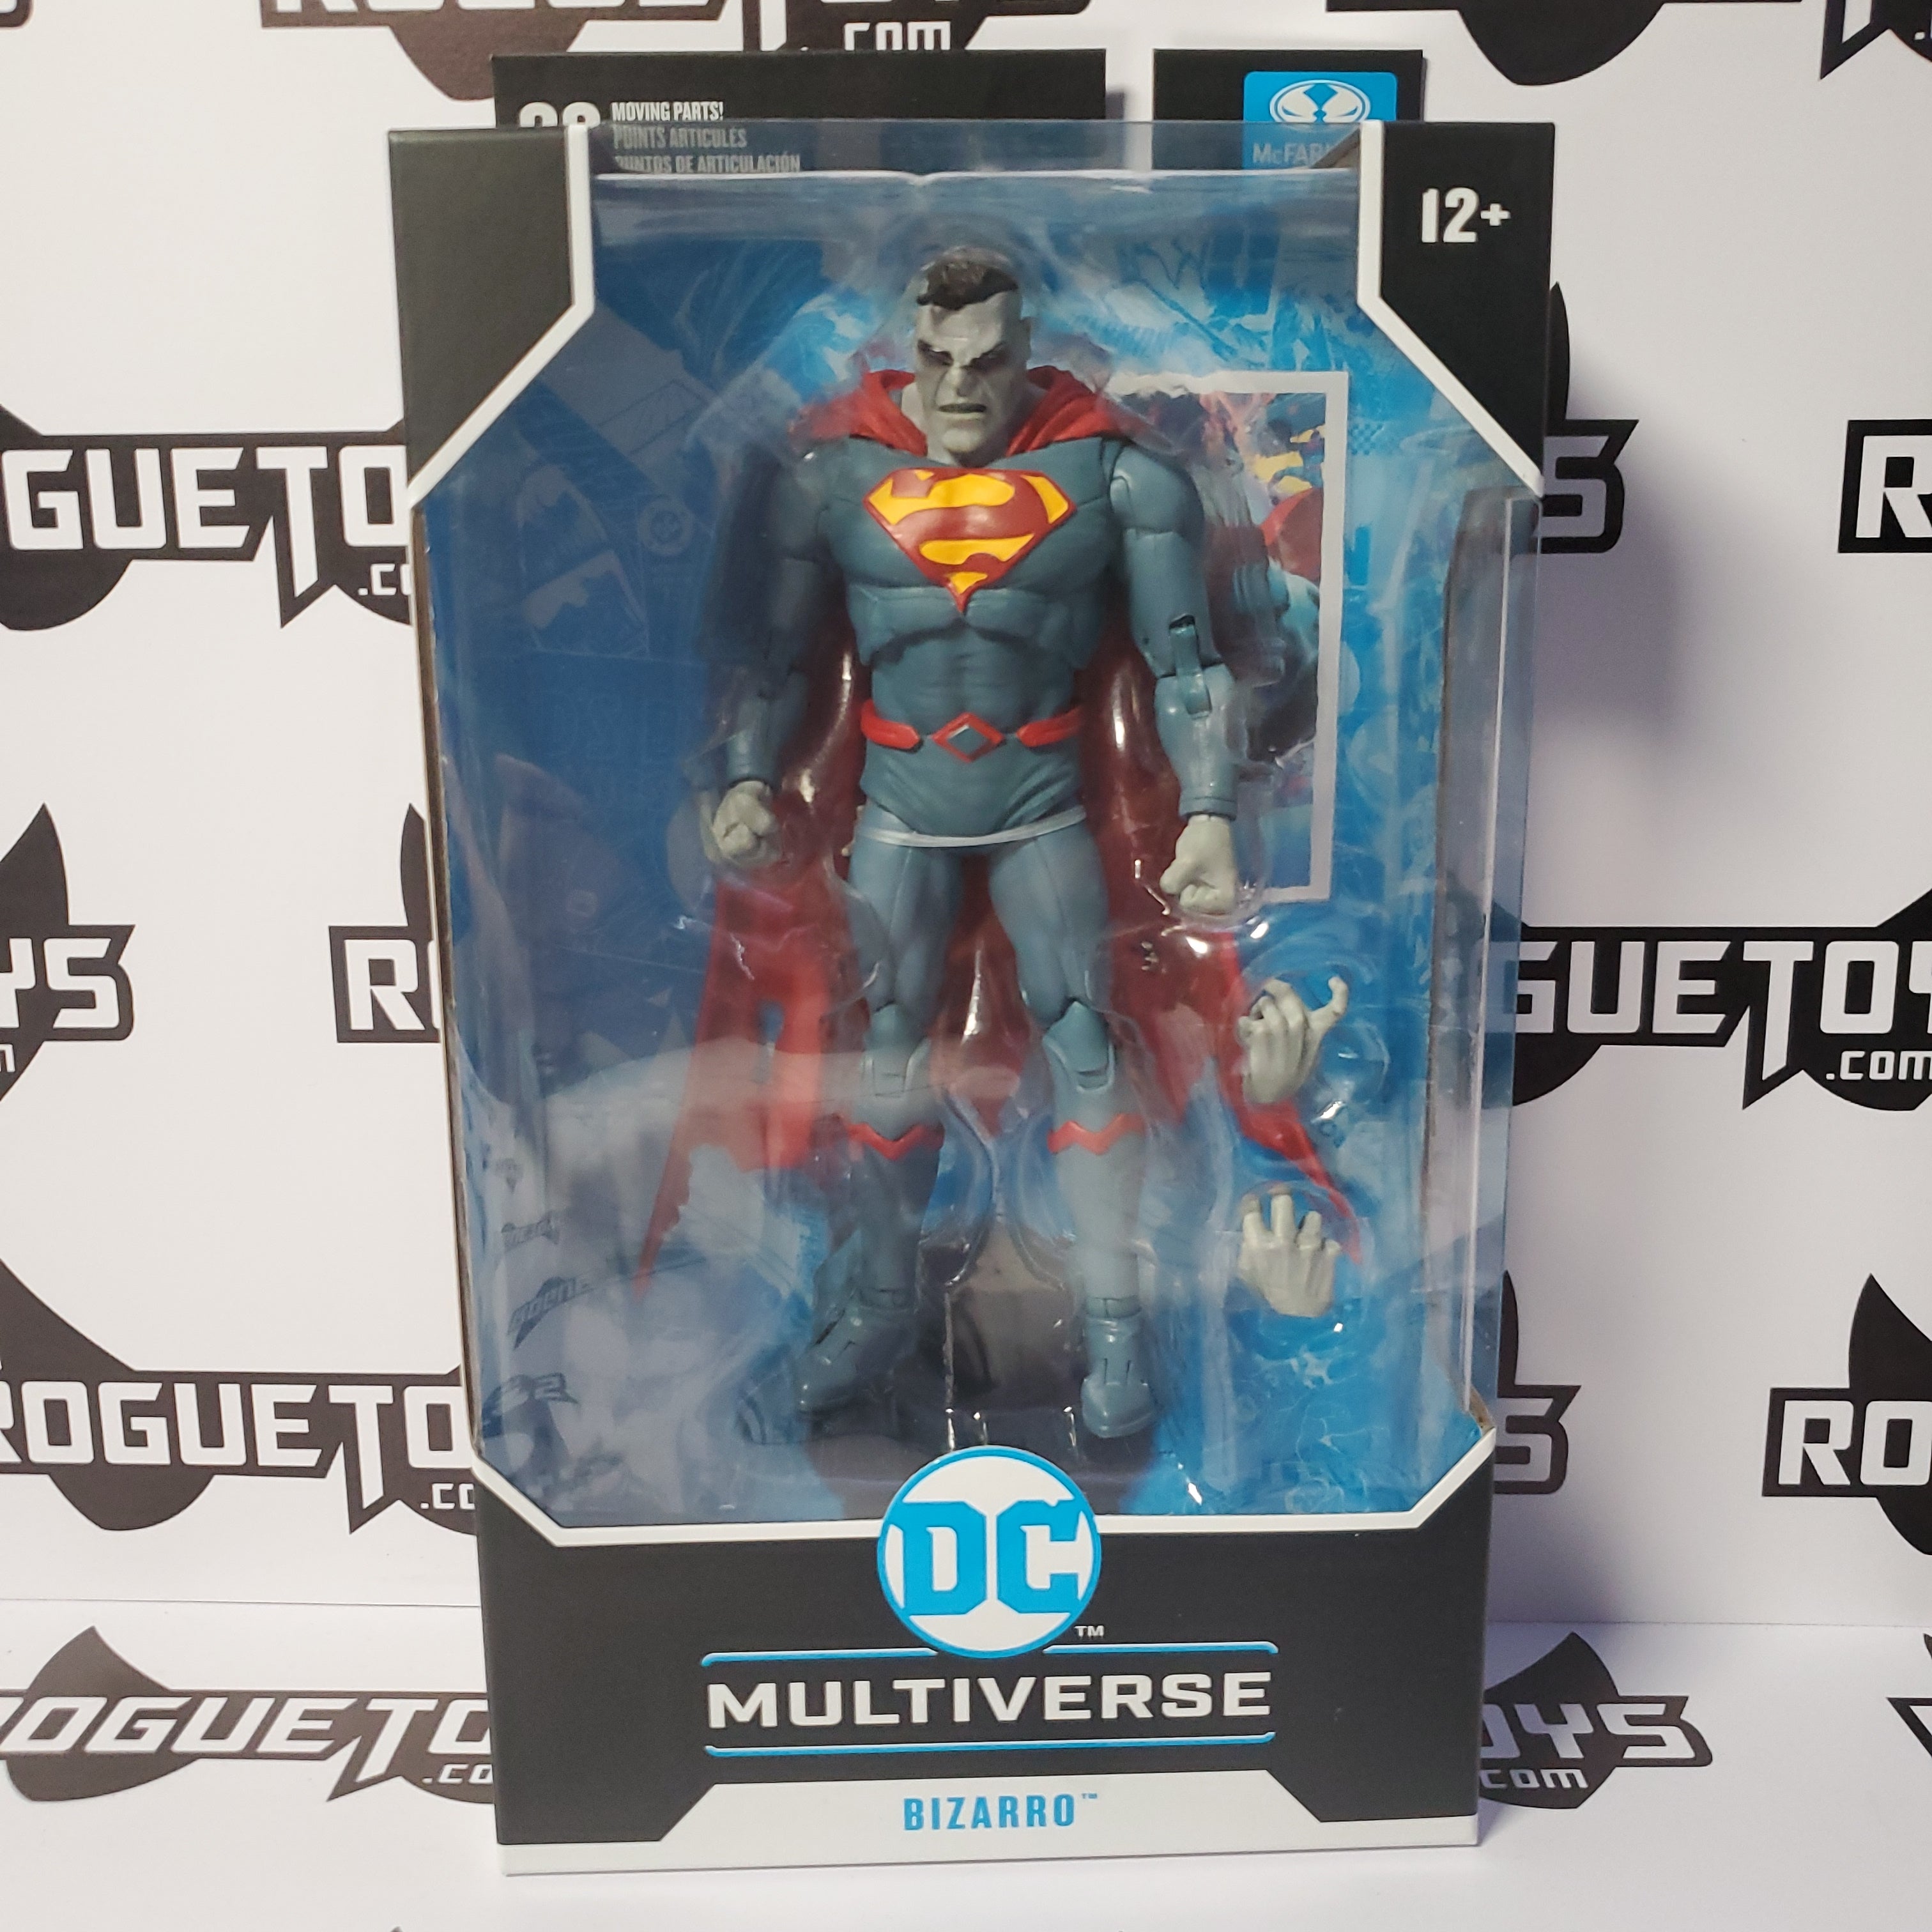 McFarlane Toys DC Multiverse Bizarro